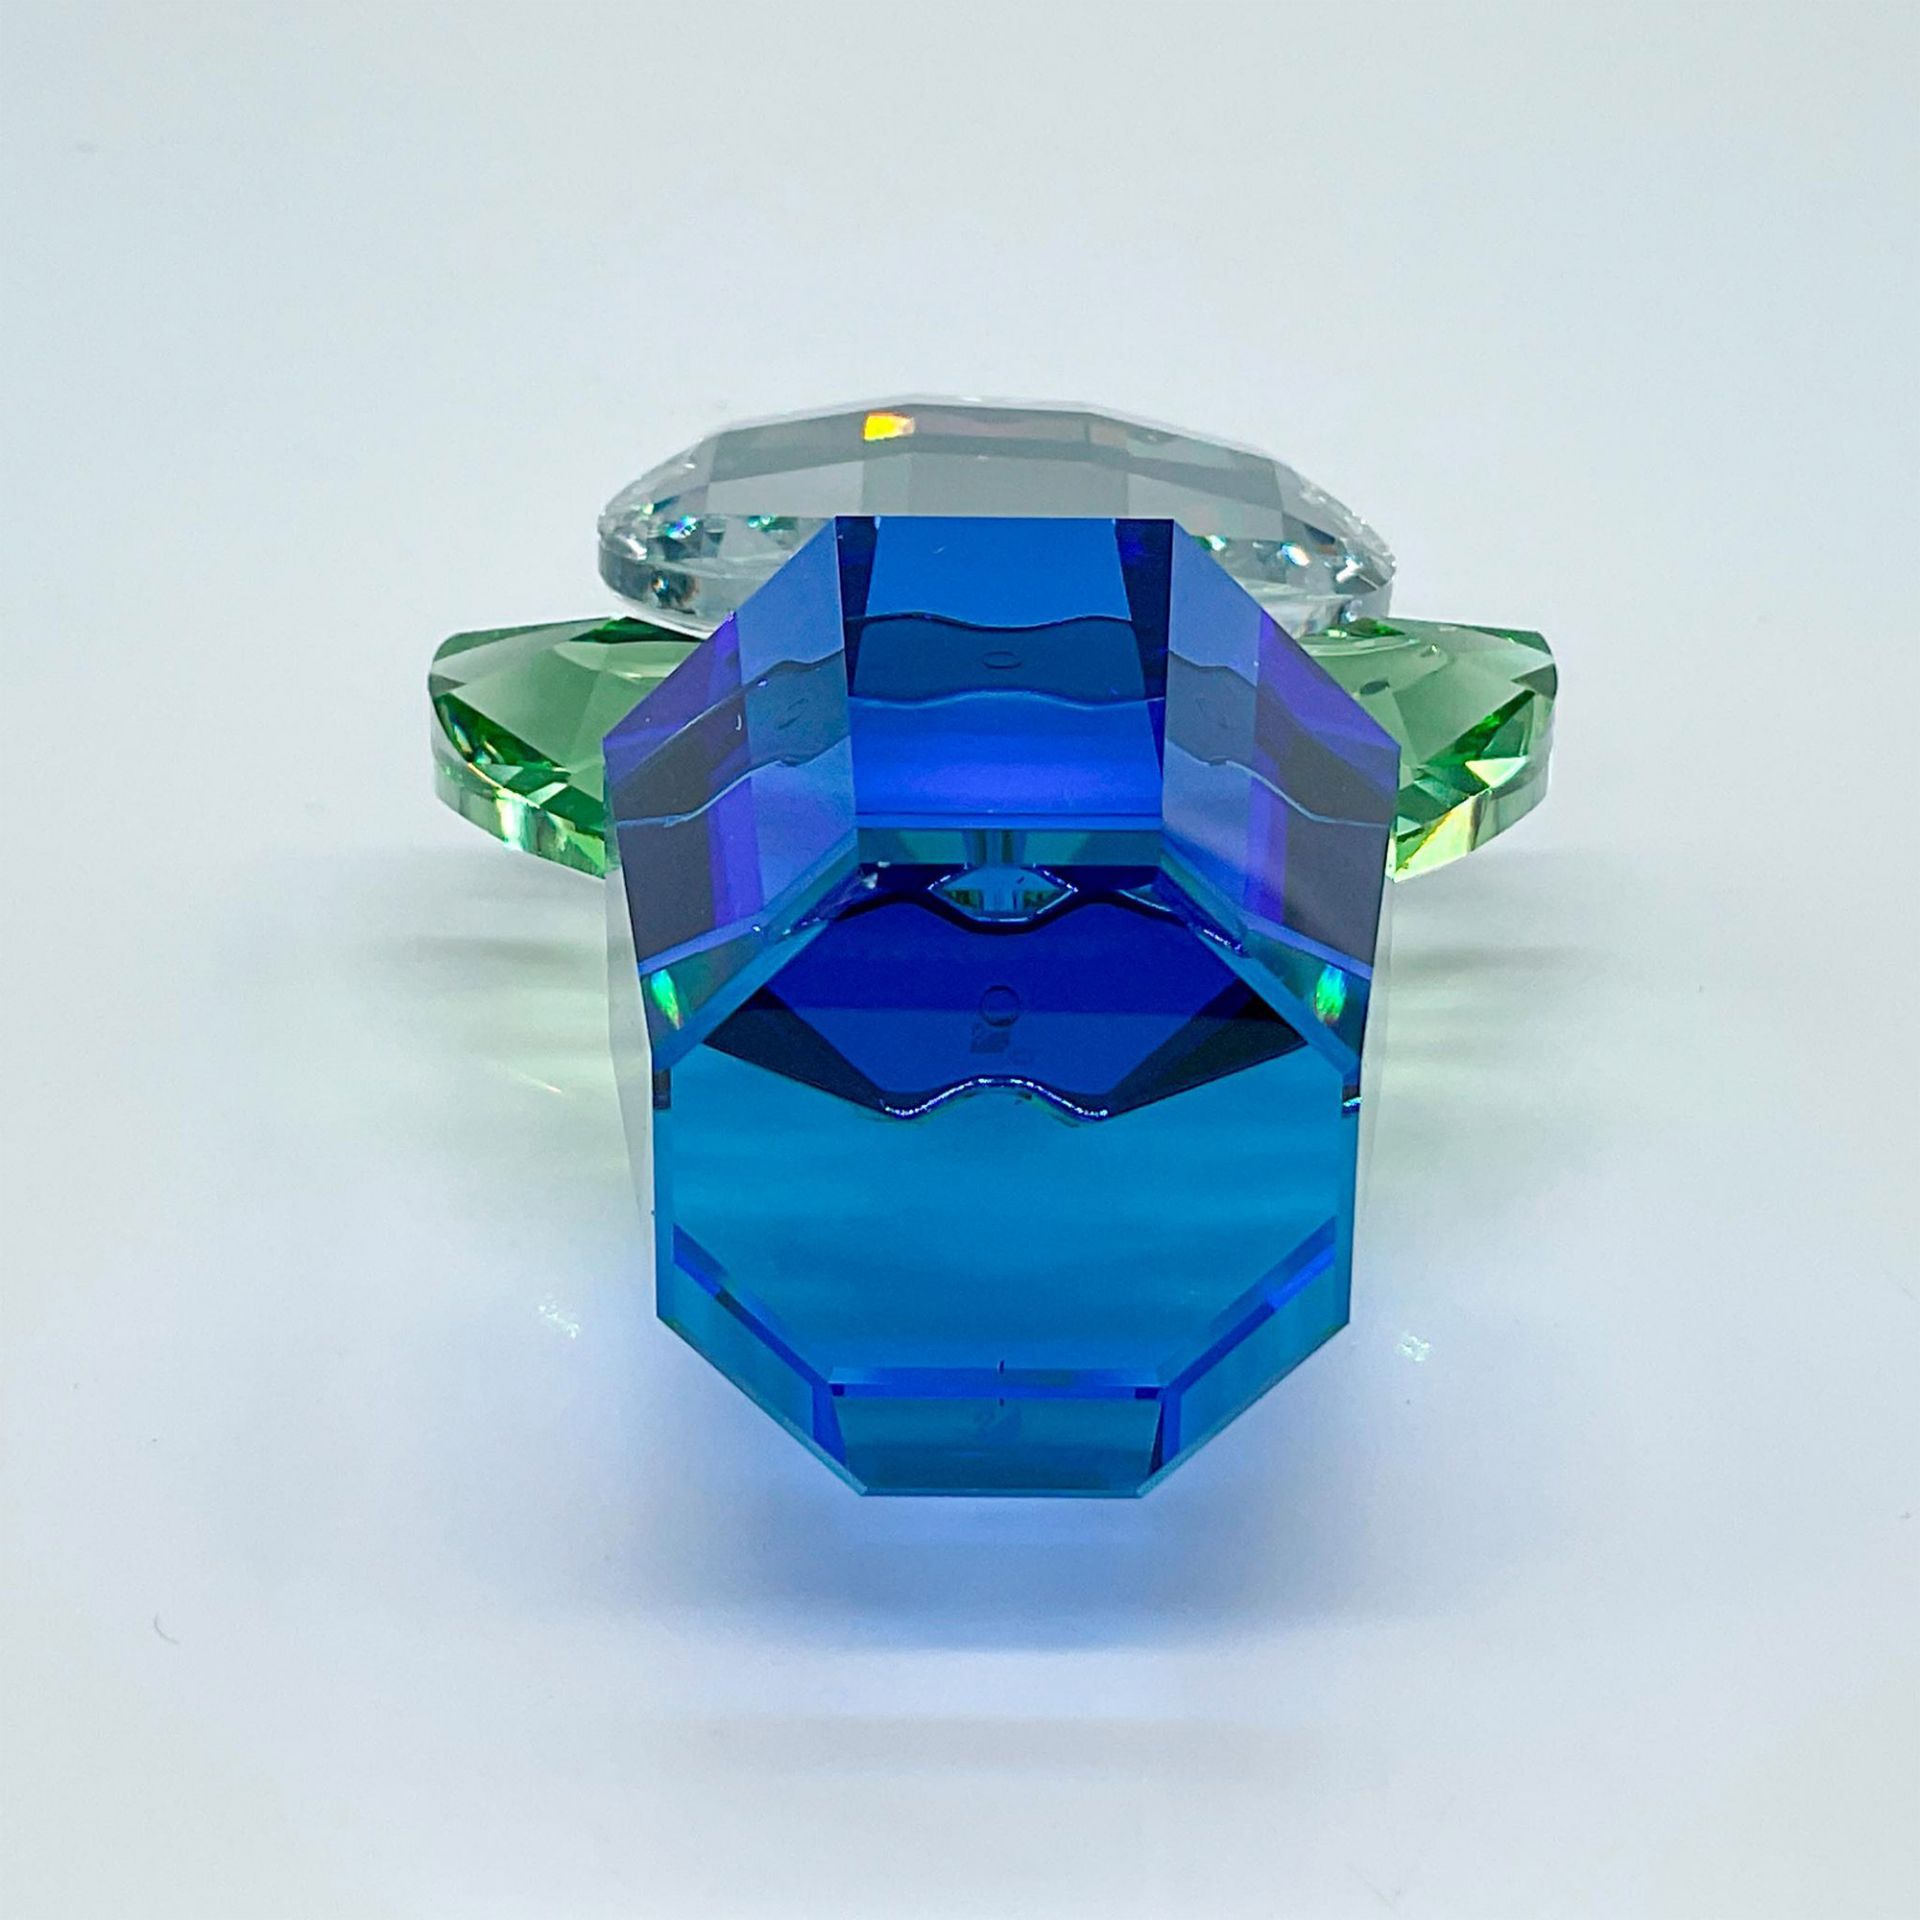 Swarovski Crystal Figurine, Clear Flower in Blue Pot - Image 3 of 3